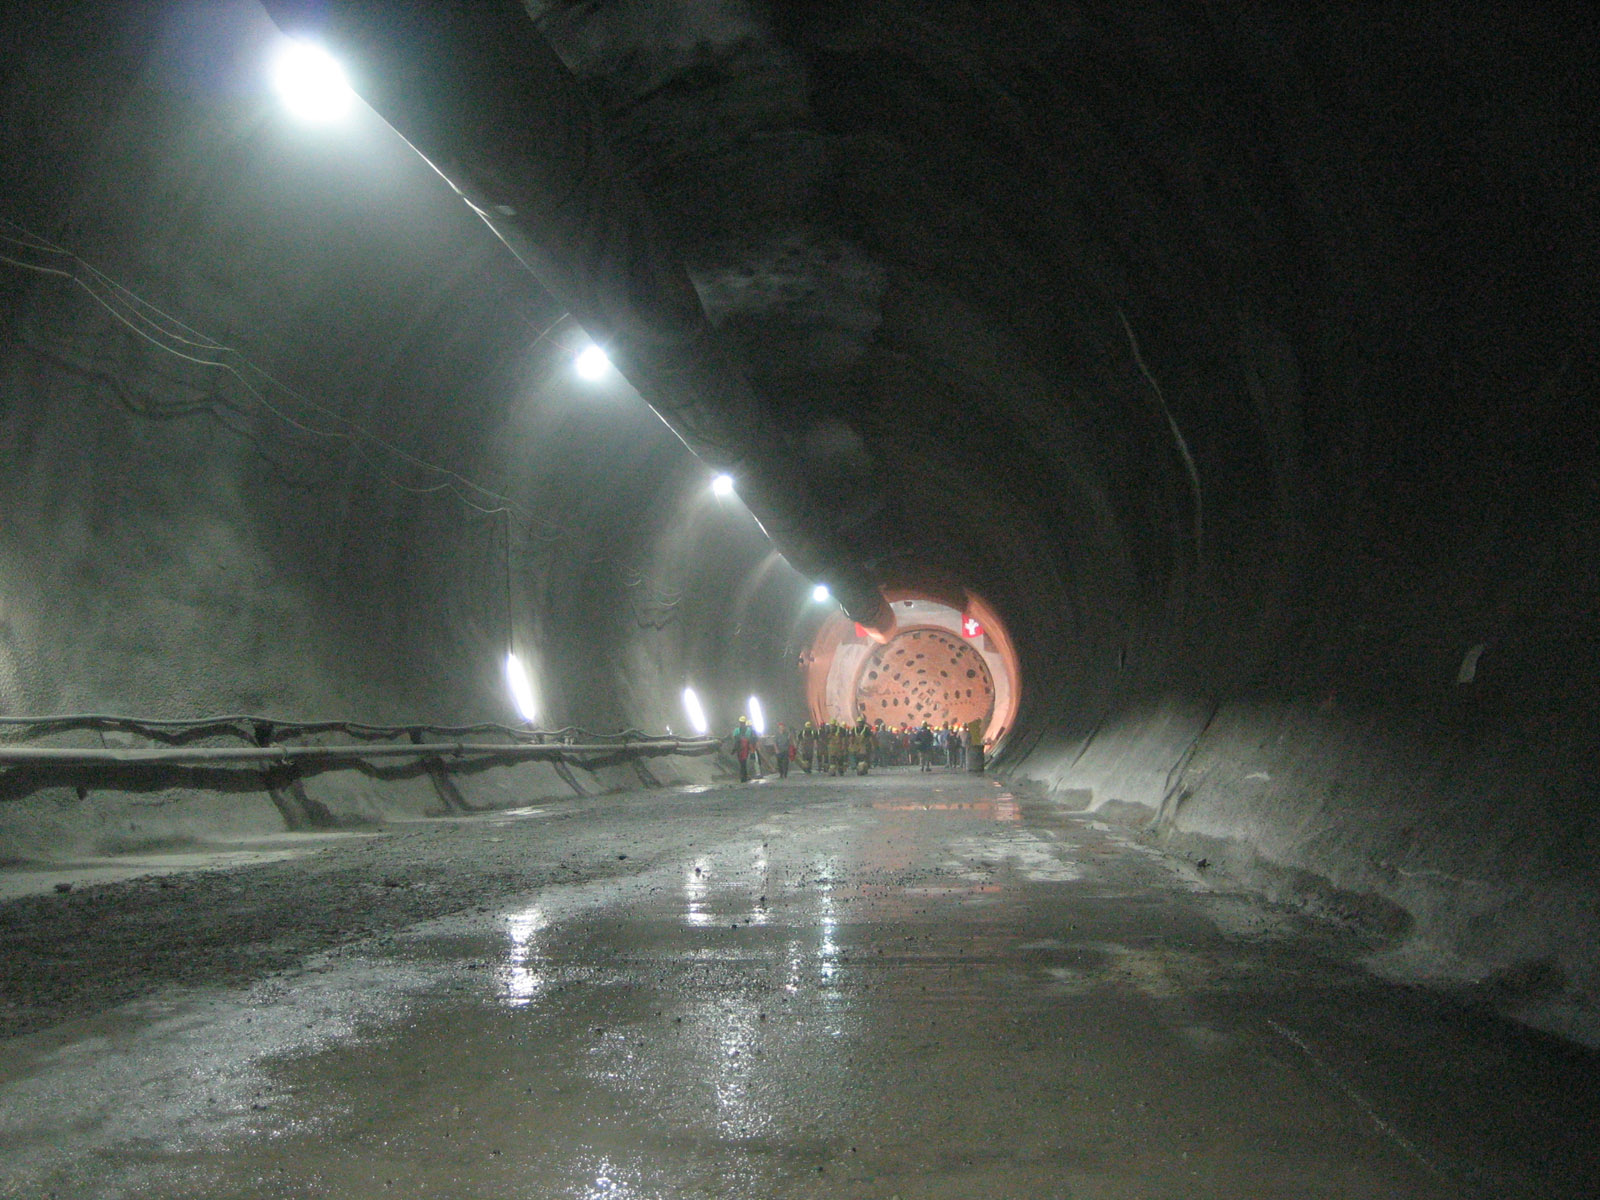  Mountain Tunnel under construction - Europe 